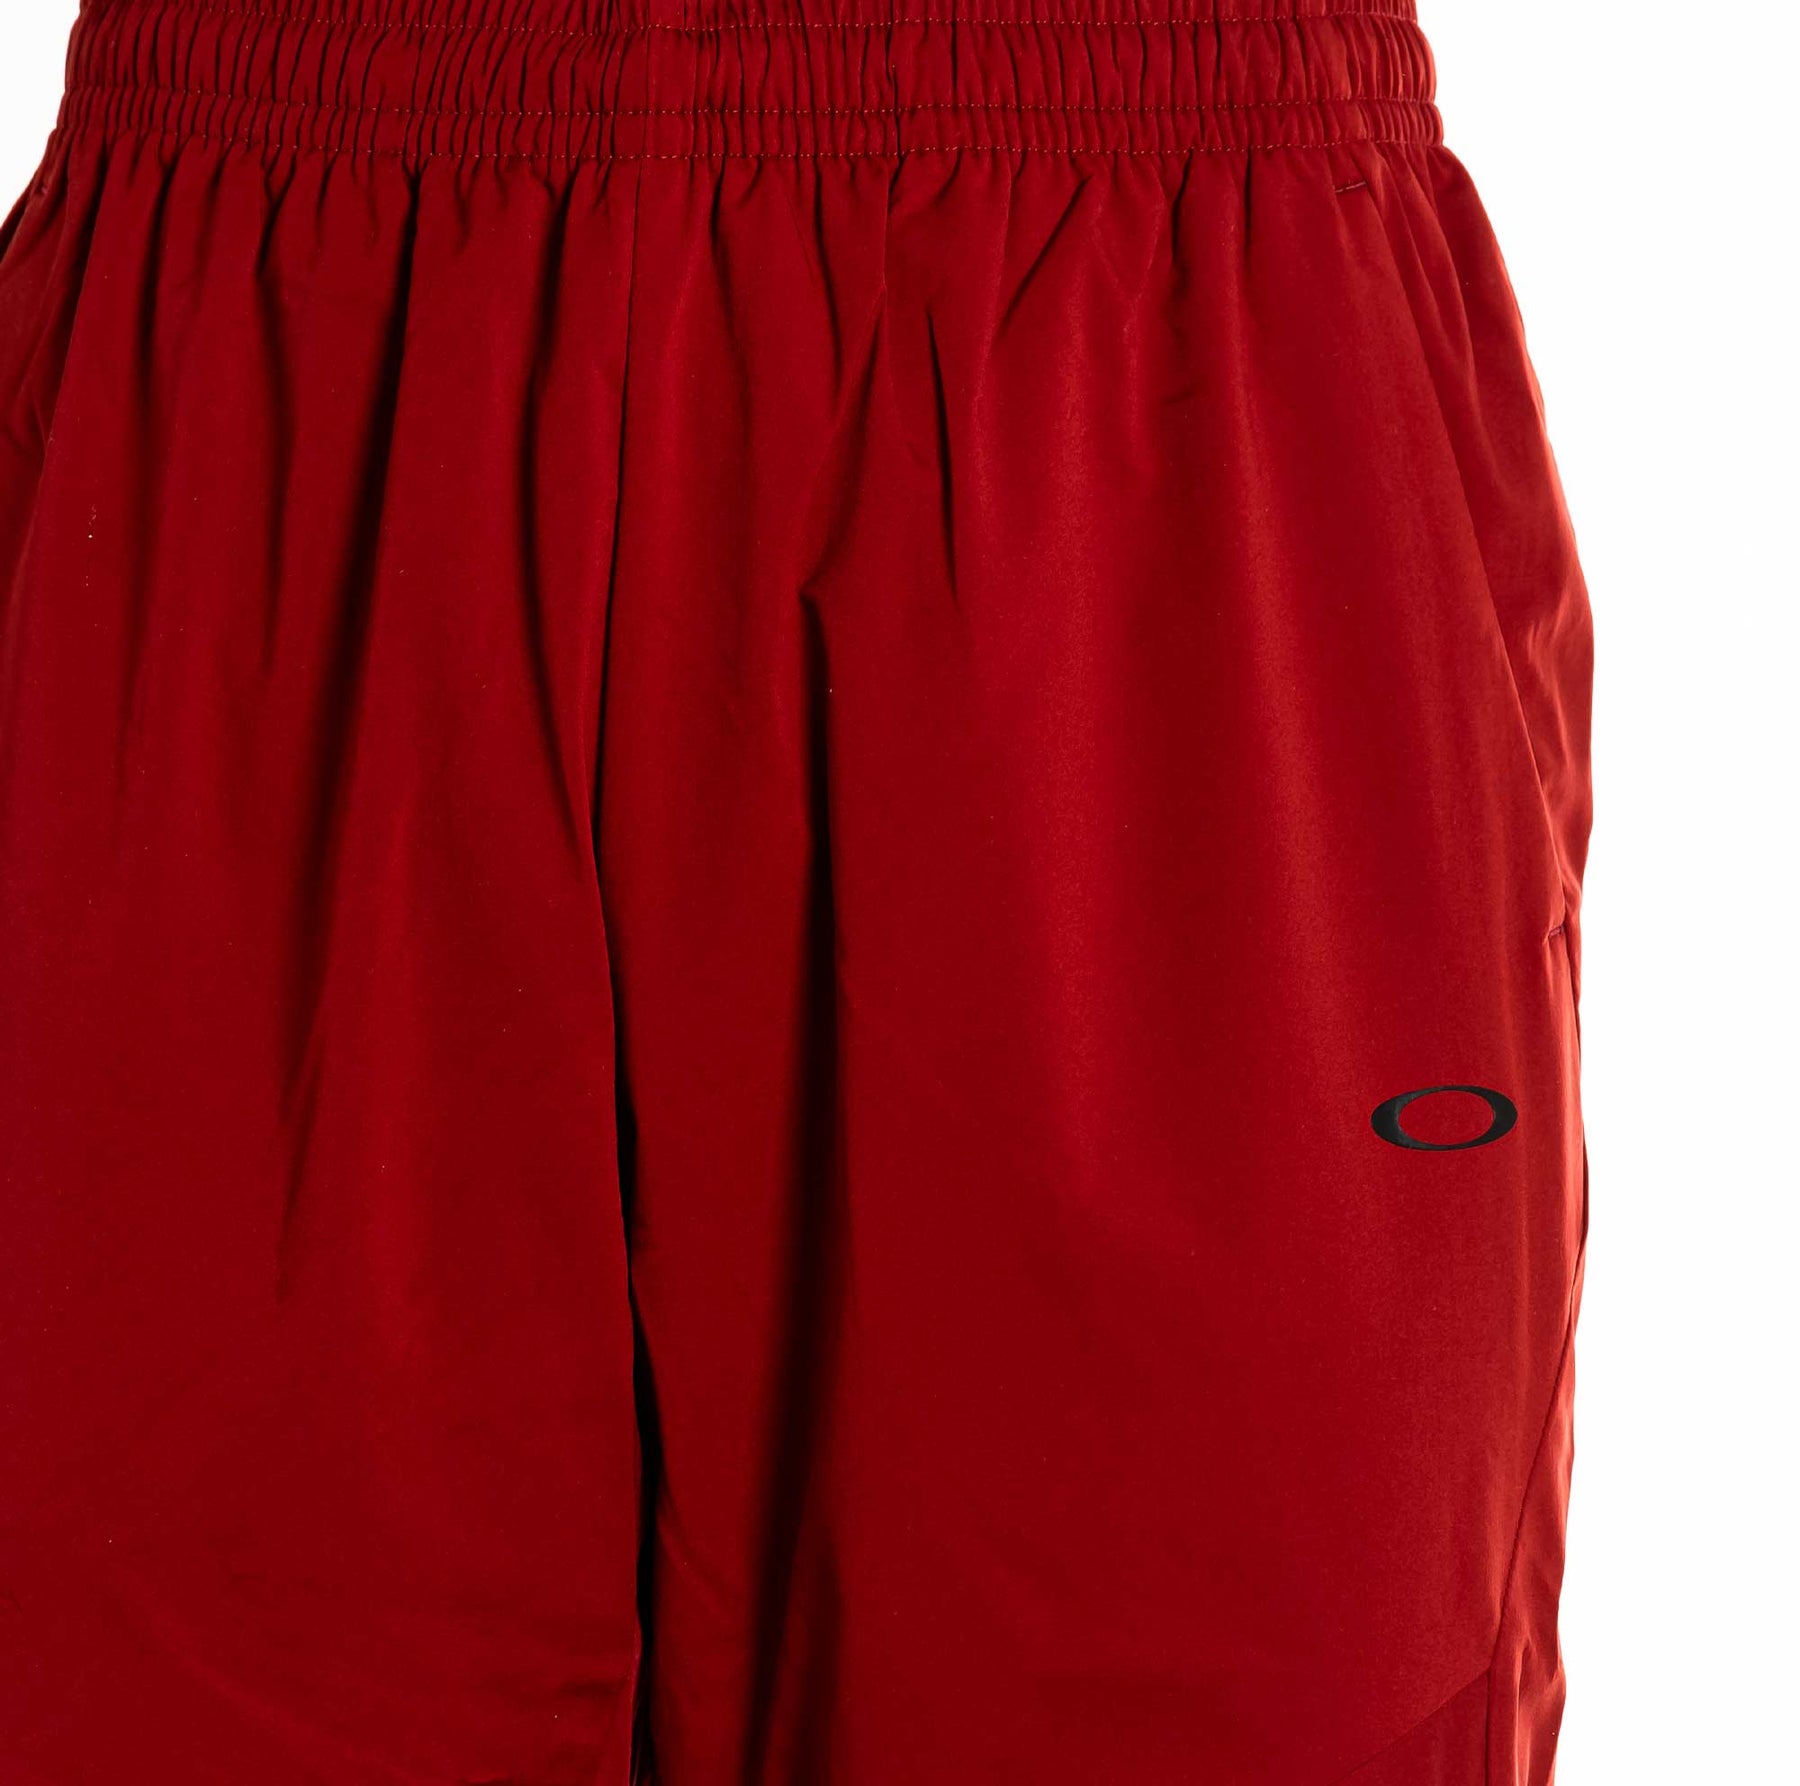 OAKLEY | Pantalone Sportivo iron red Uomo | 422456